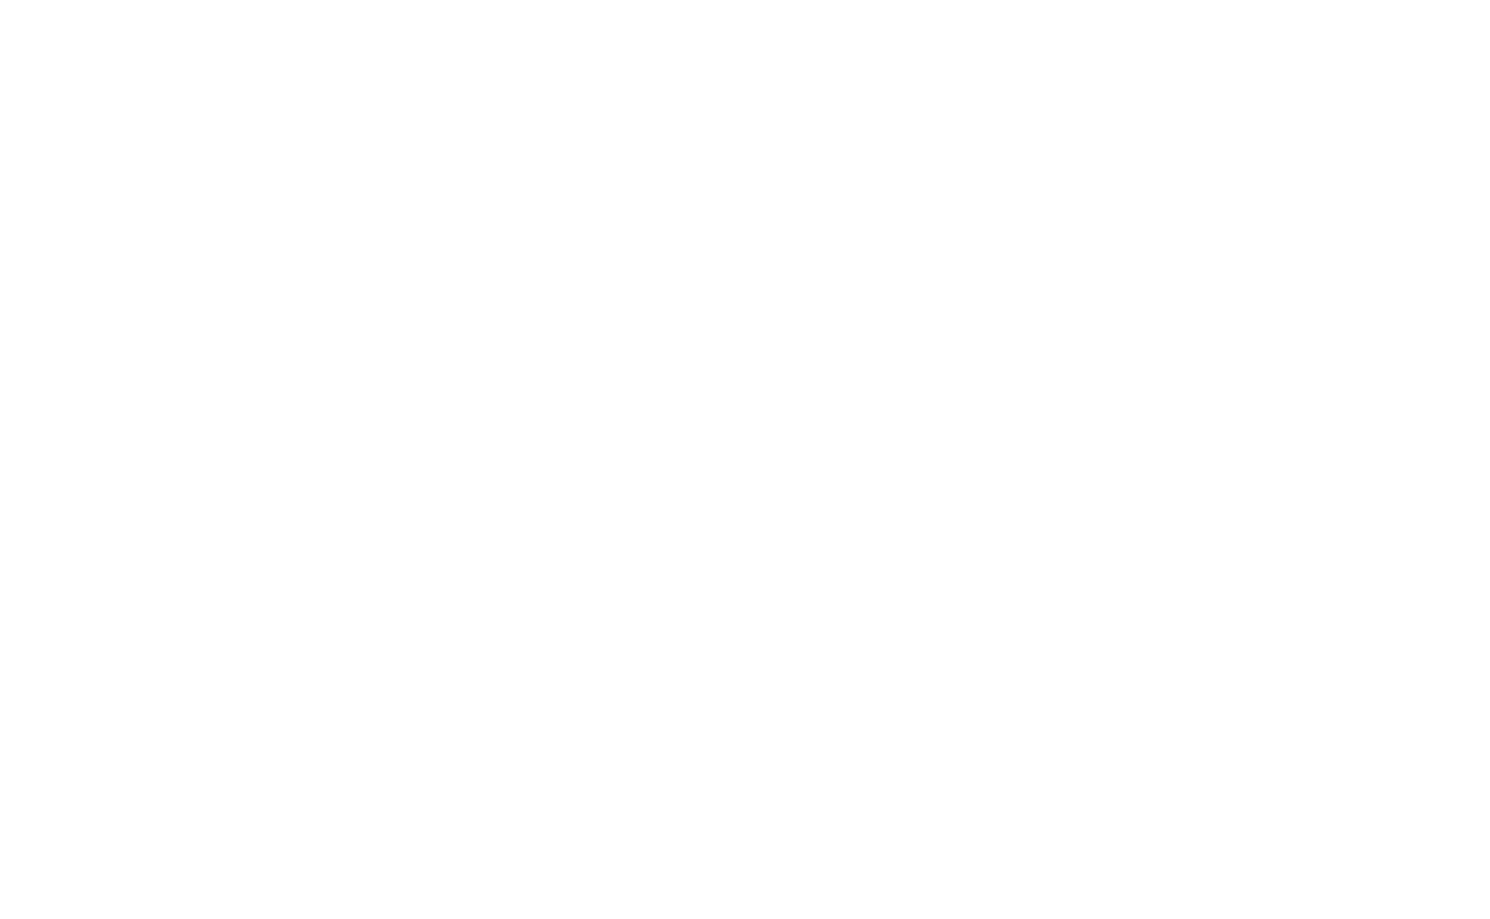 Apollo Chorus of Chicago